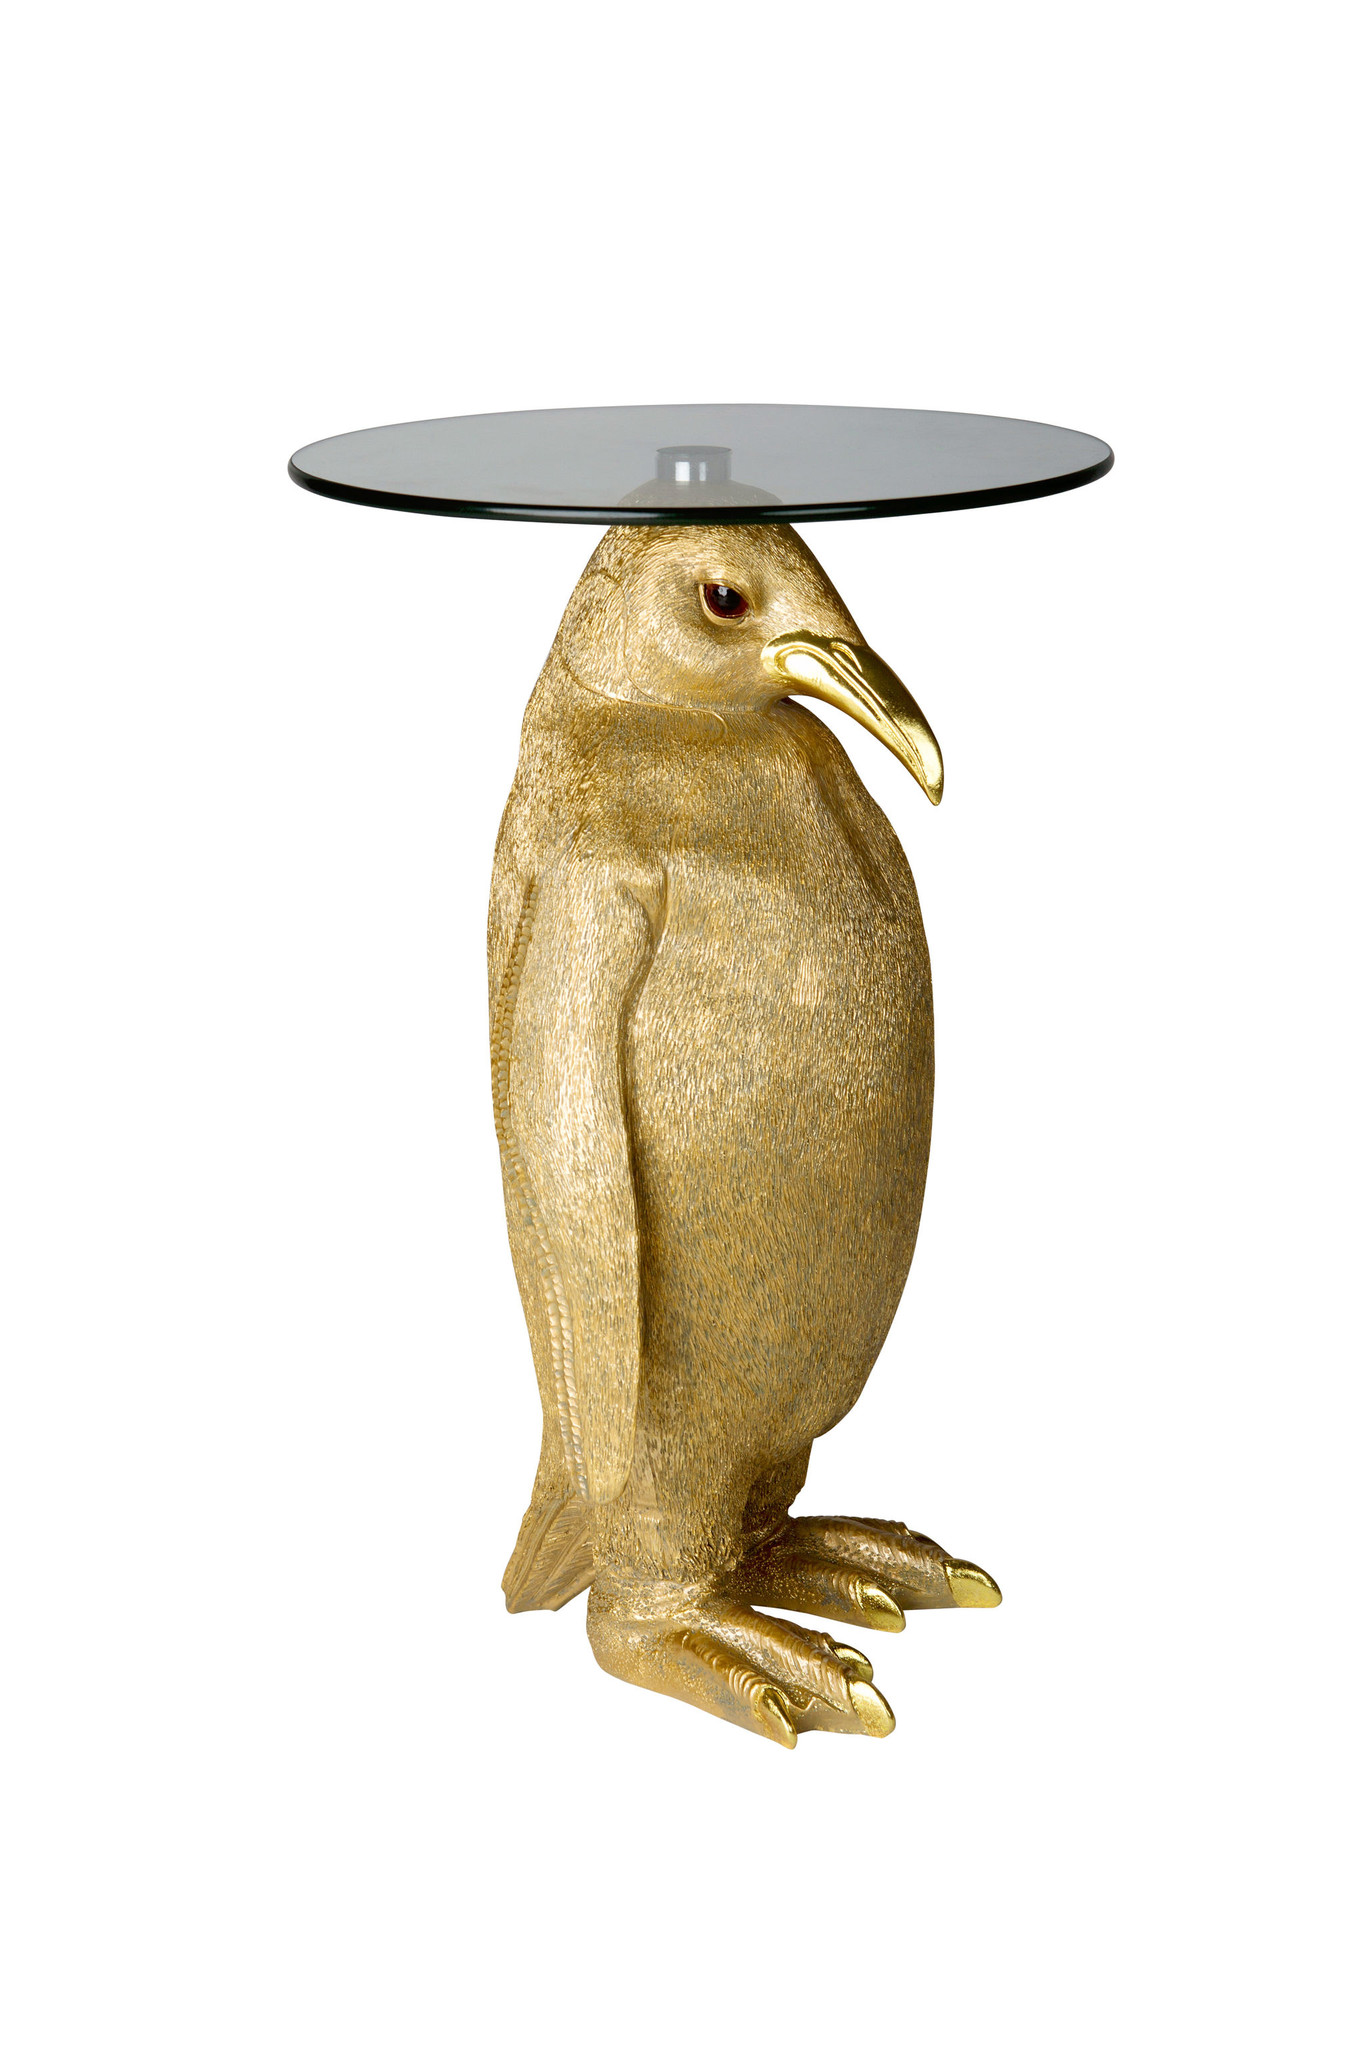 Pinguïn met tafelblad van glas, goudkleurig van KITCHEN TREND